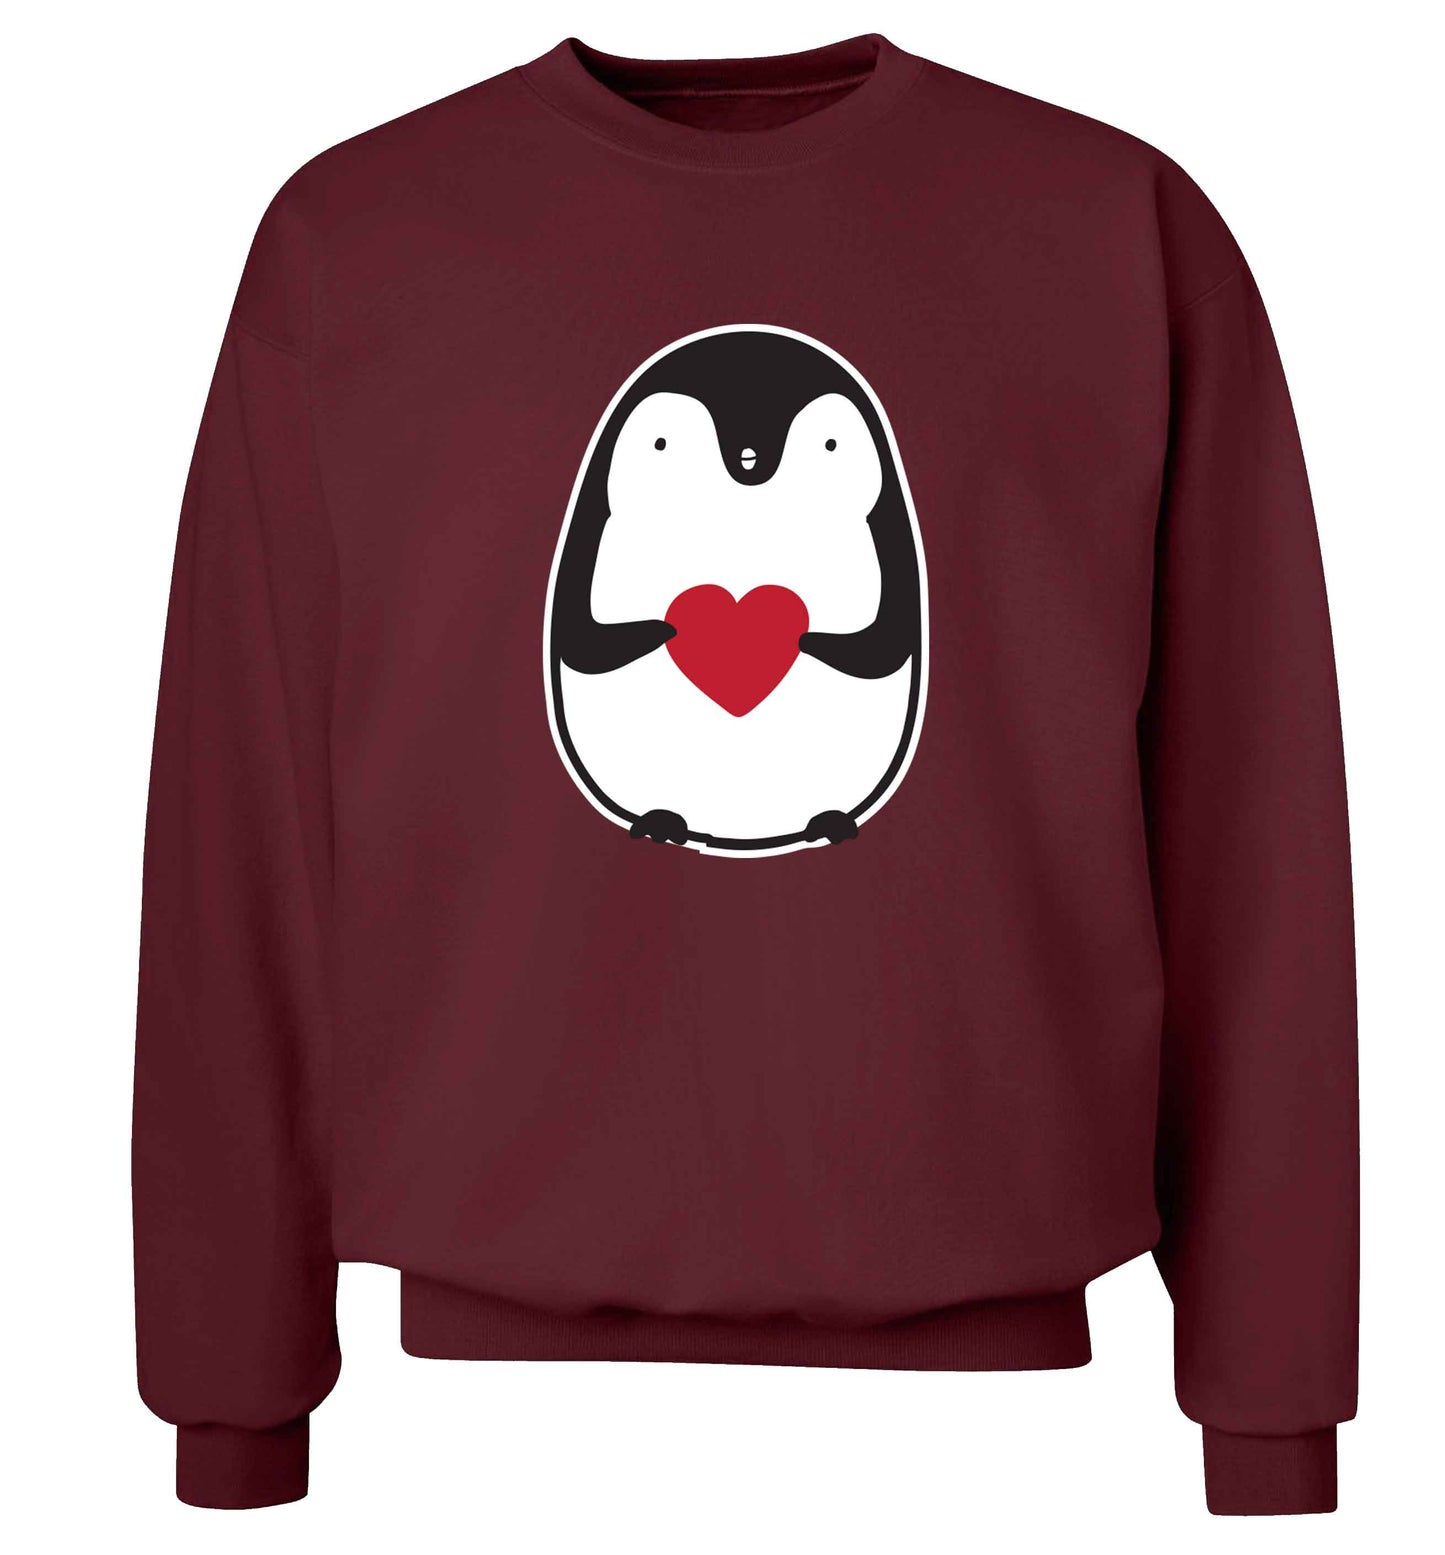 Cute penguin heart adult's unisex maroon sweater 2XL